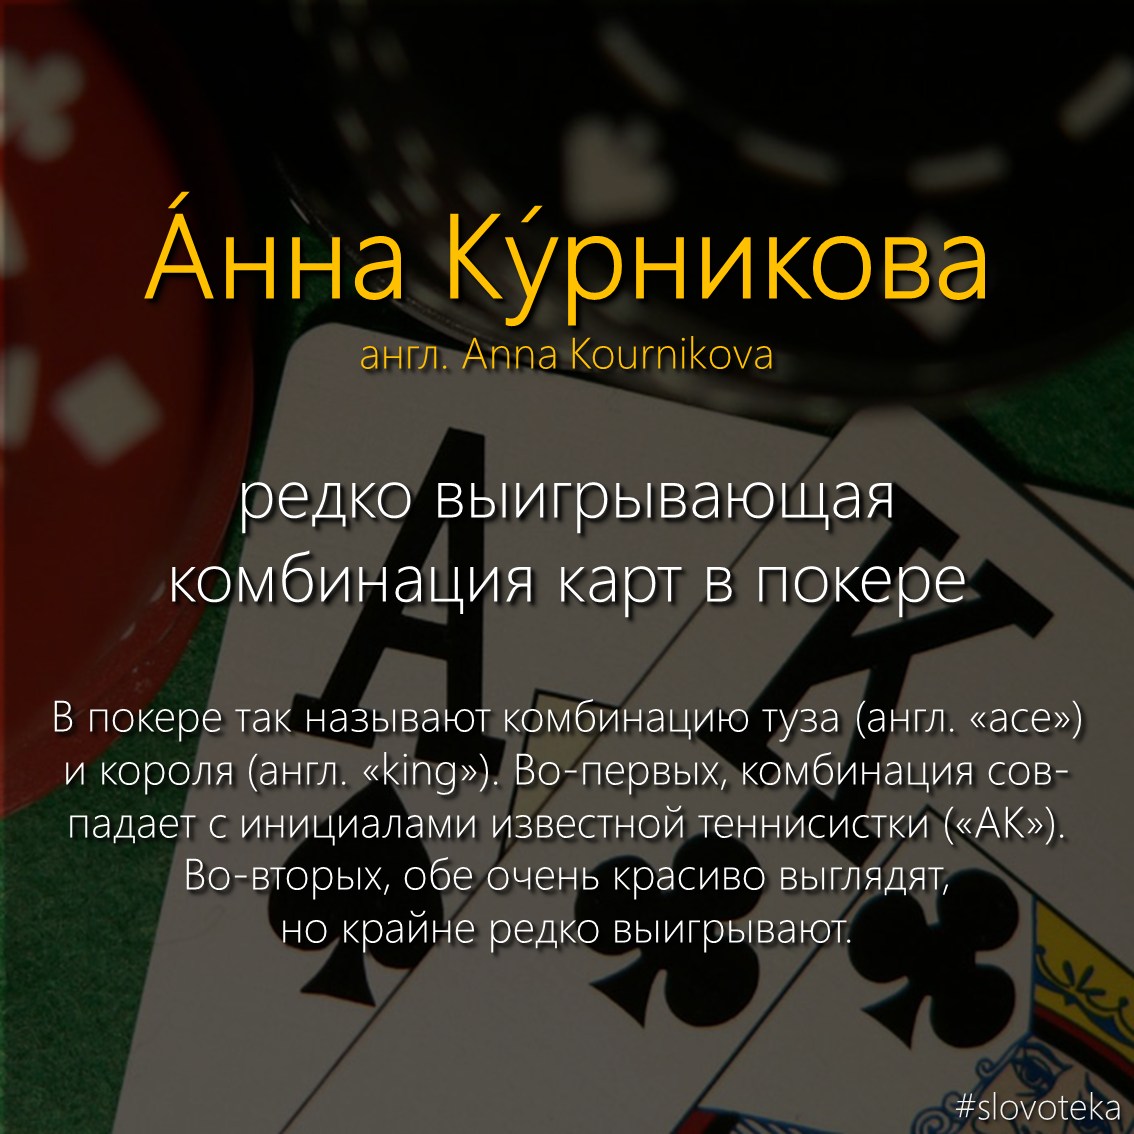 Anna Kournikova - Slovoteka, Word, The words, Dictionary, Anna Kournikova, Poker, Cards, Longpost